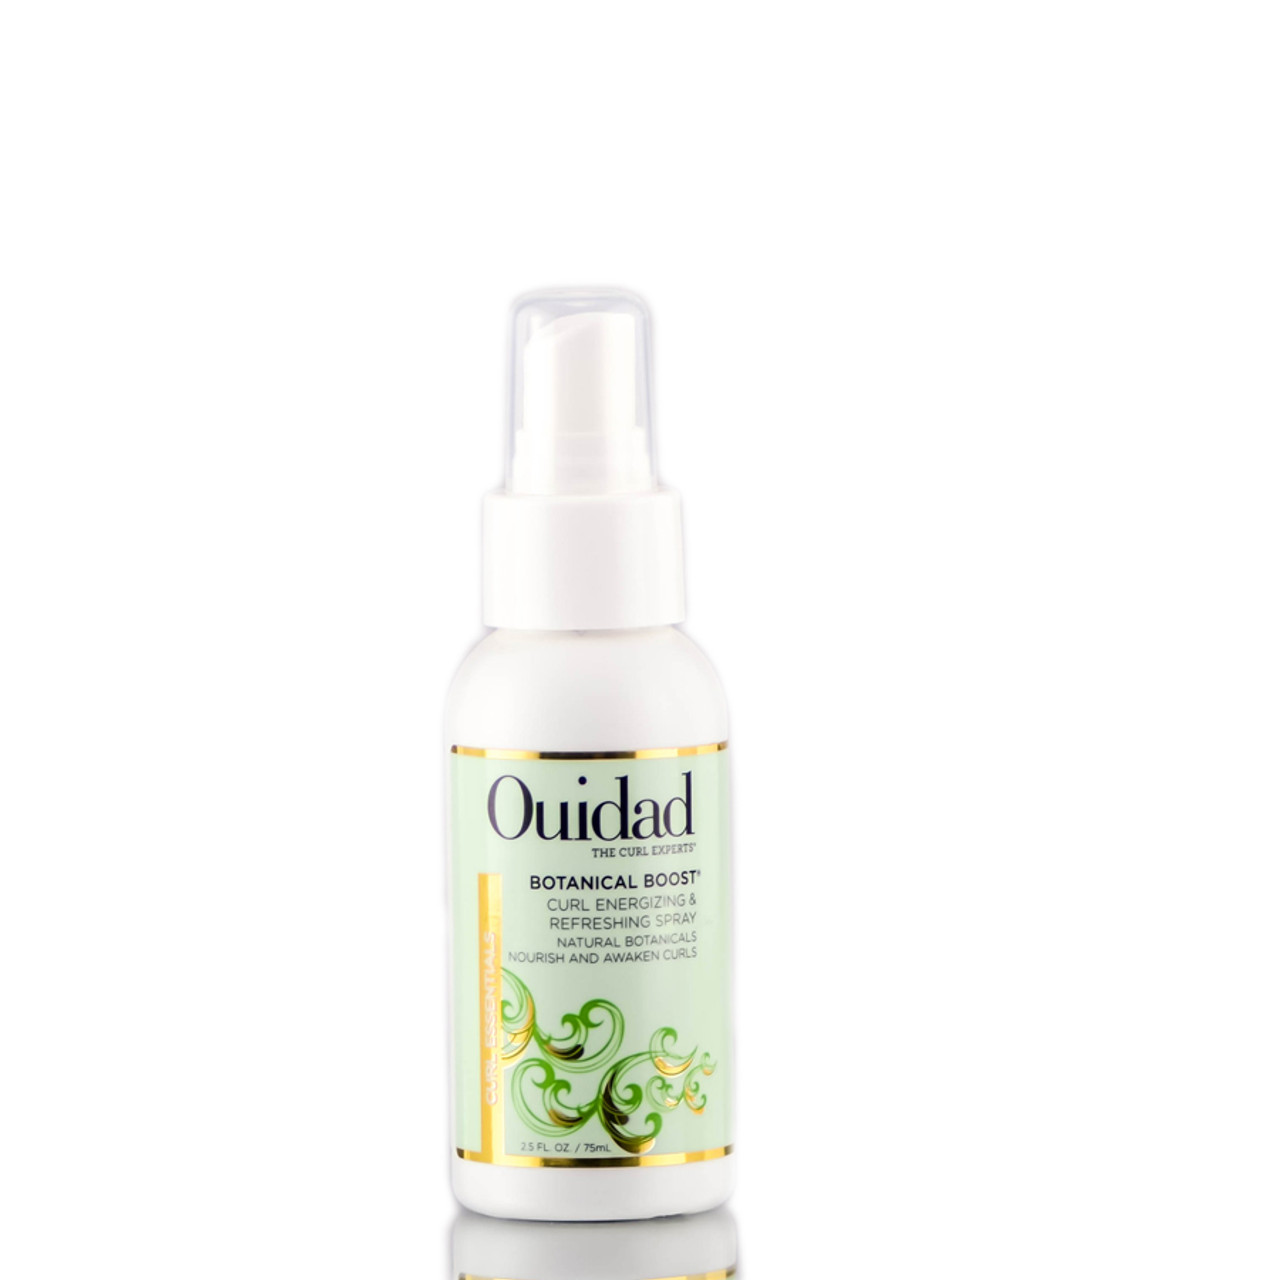 Ouidad Botanical Boost Curl Energizing & Refreshing Spray SleekShop.com